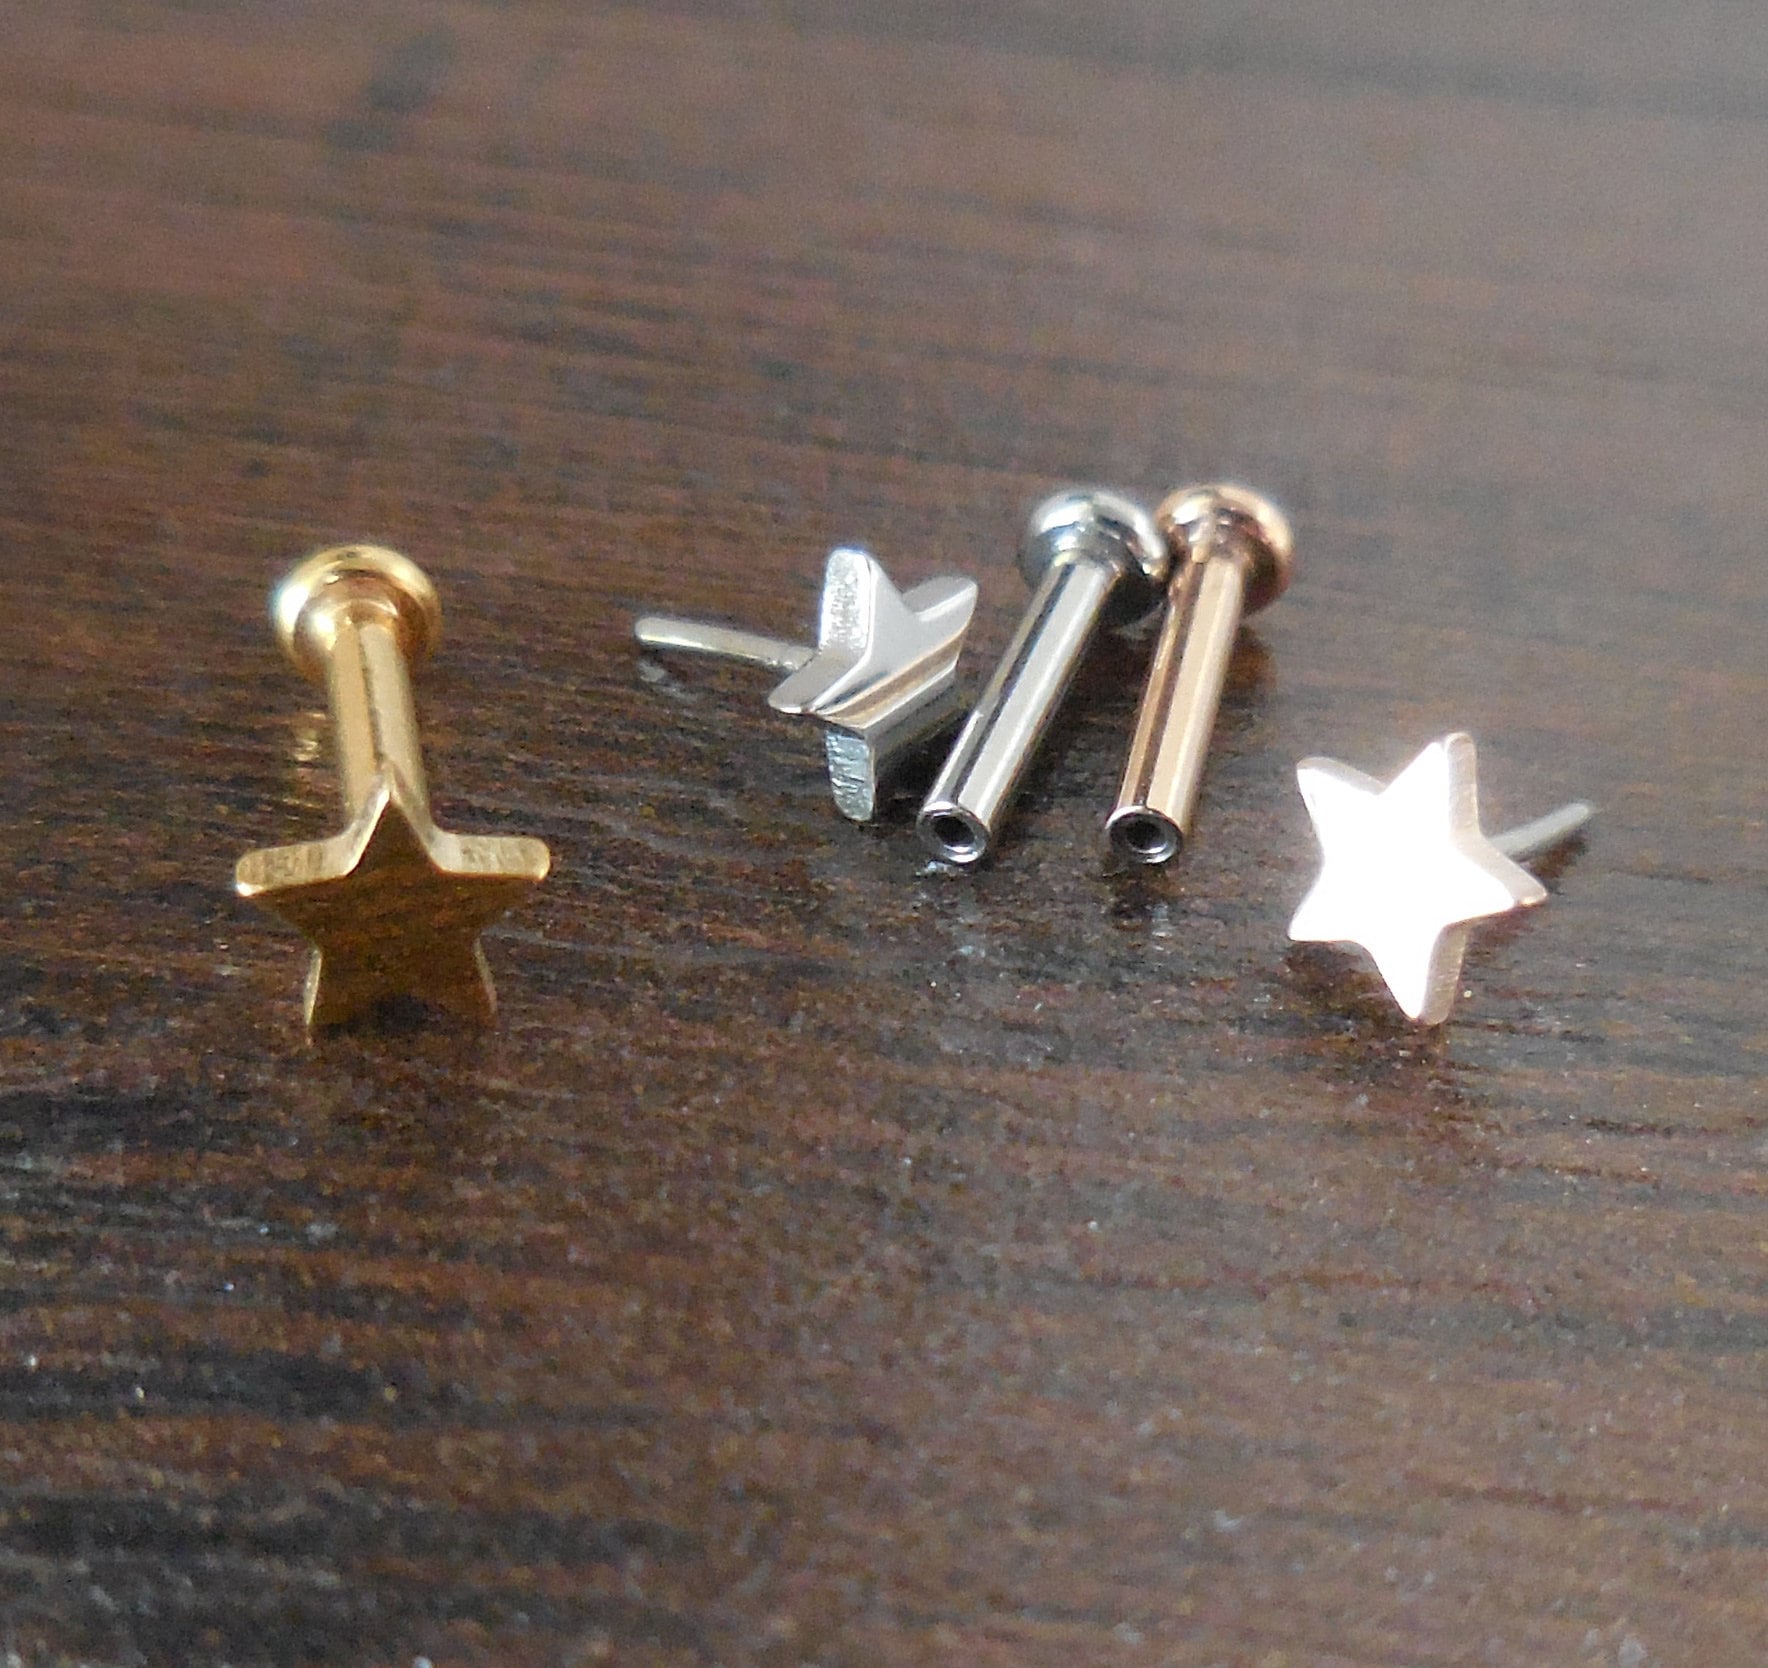 16G, 18G, 20G Cartilage Earring Threadless FlatBack Mini Star Labret Stud  Tragus Helix Push Pin Conch Earrings Gold Tone Rose Stud